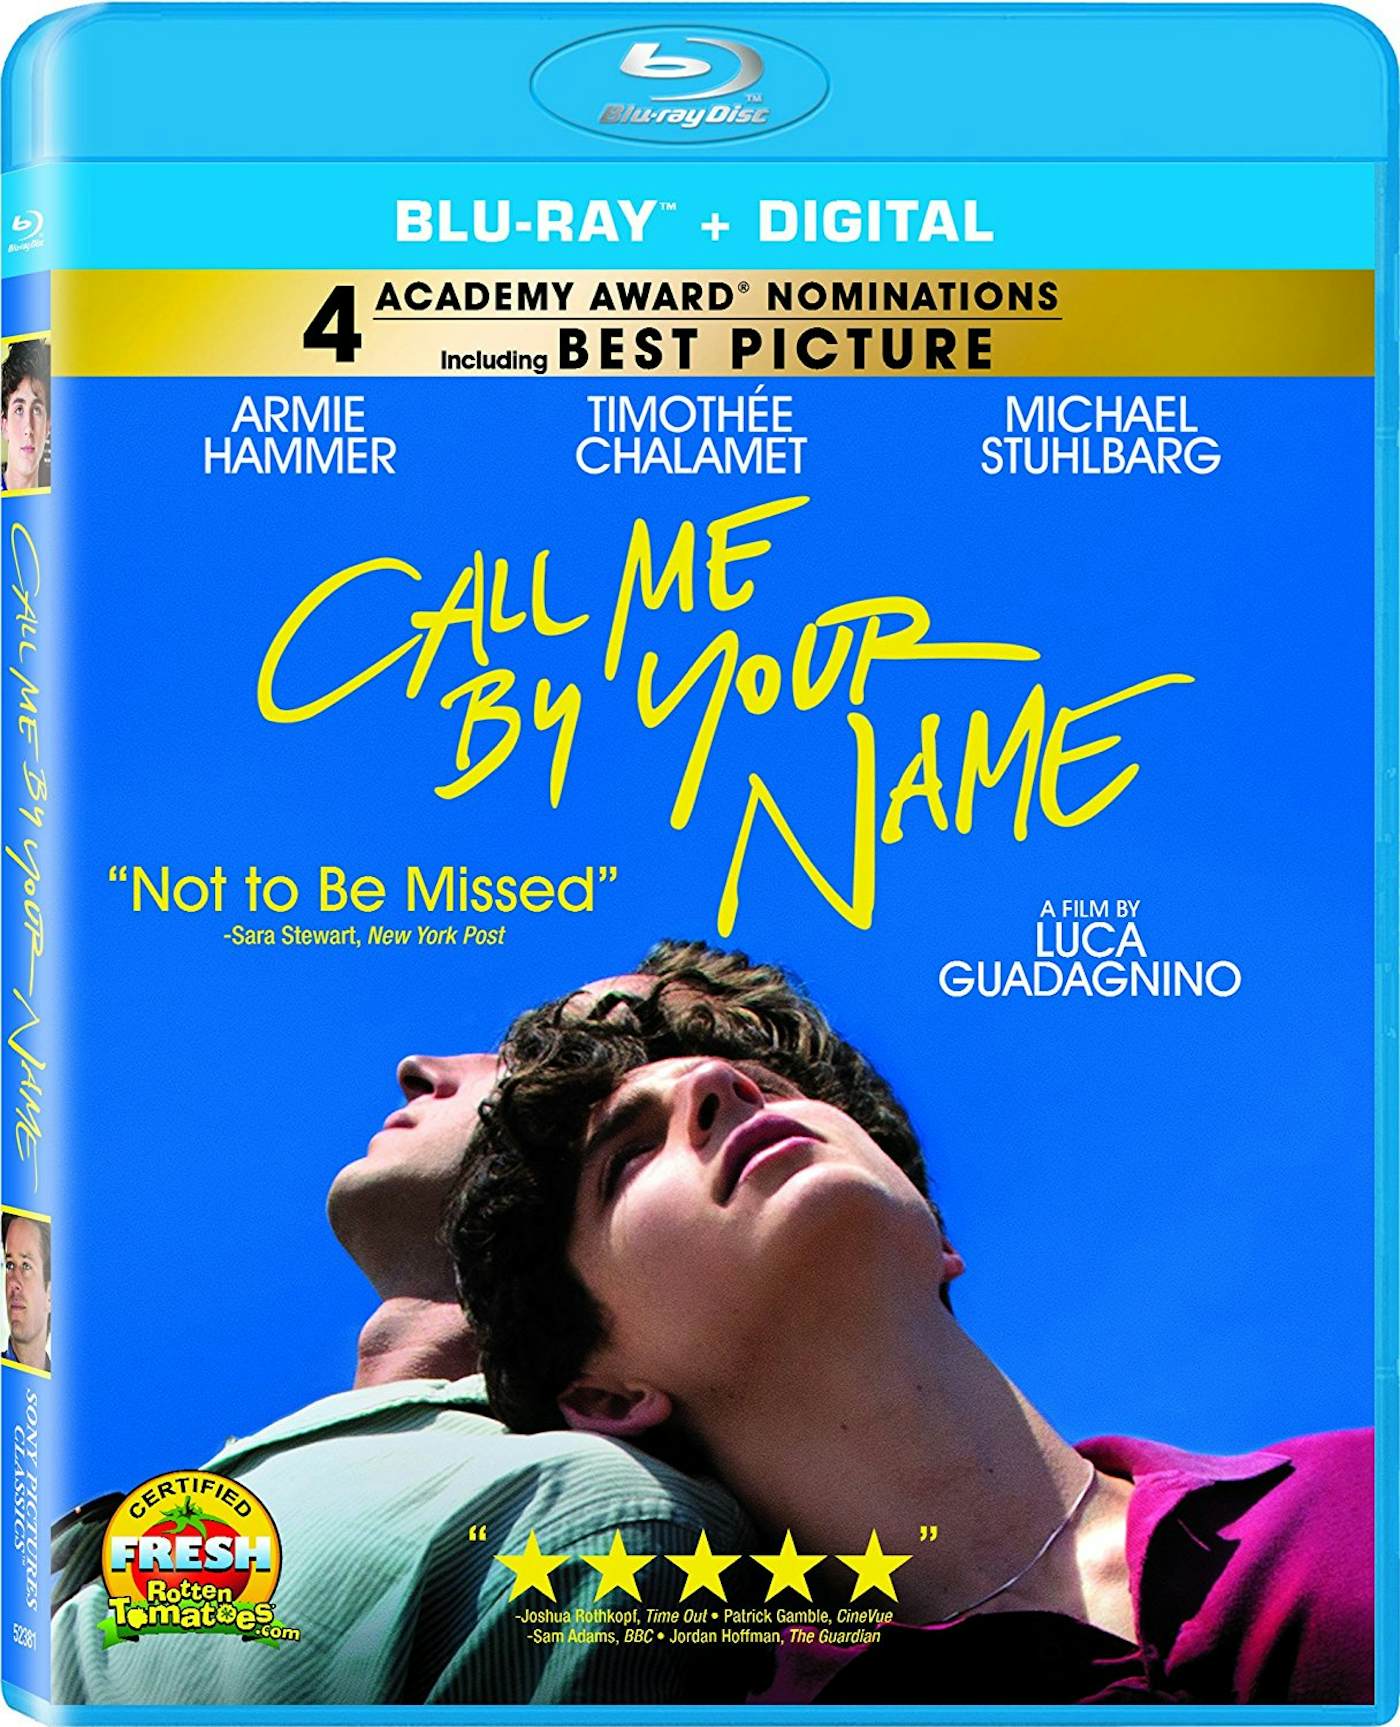 Your Name. [Blu-ray]